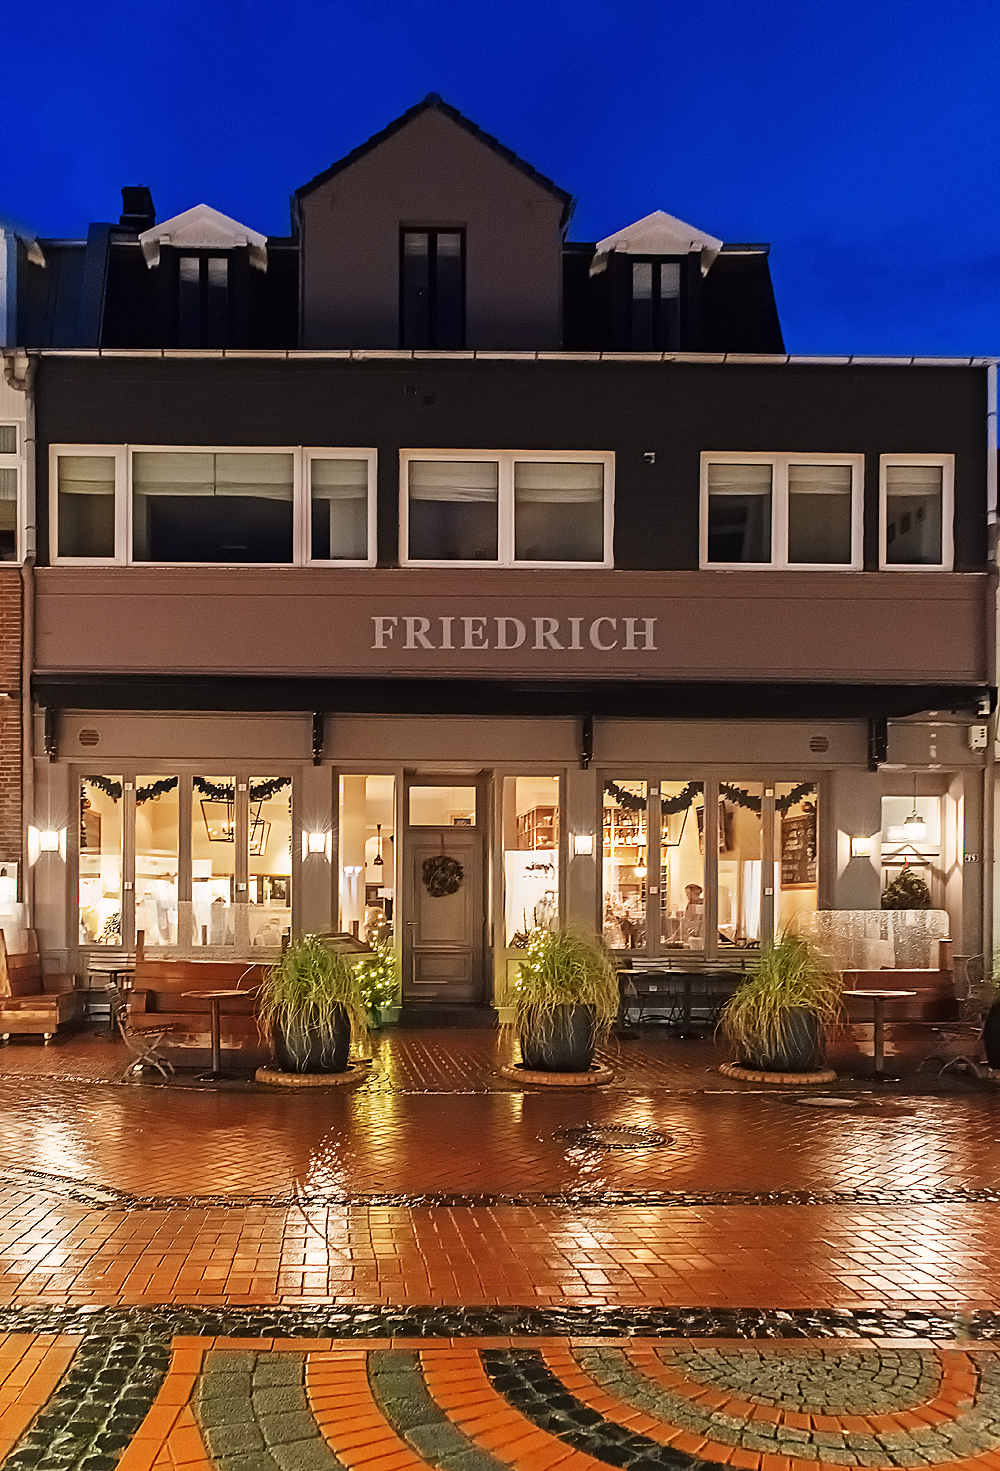 Café Friedrich